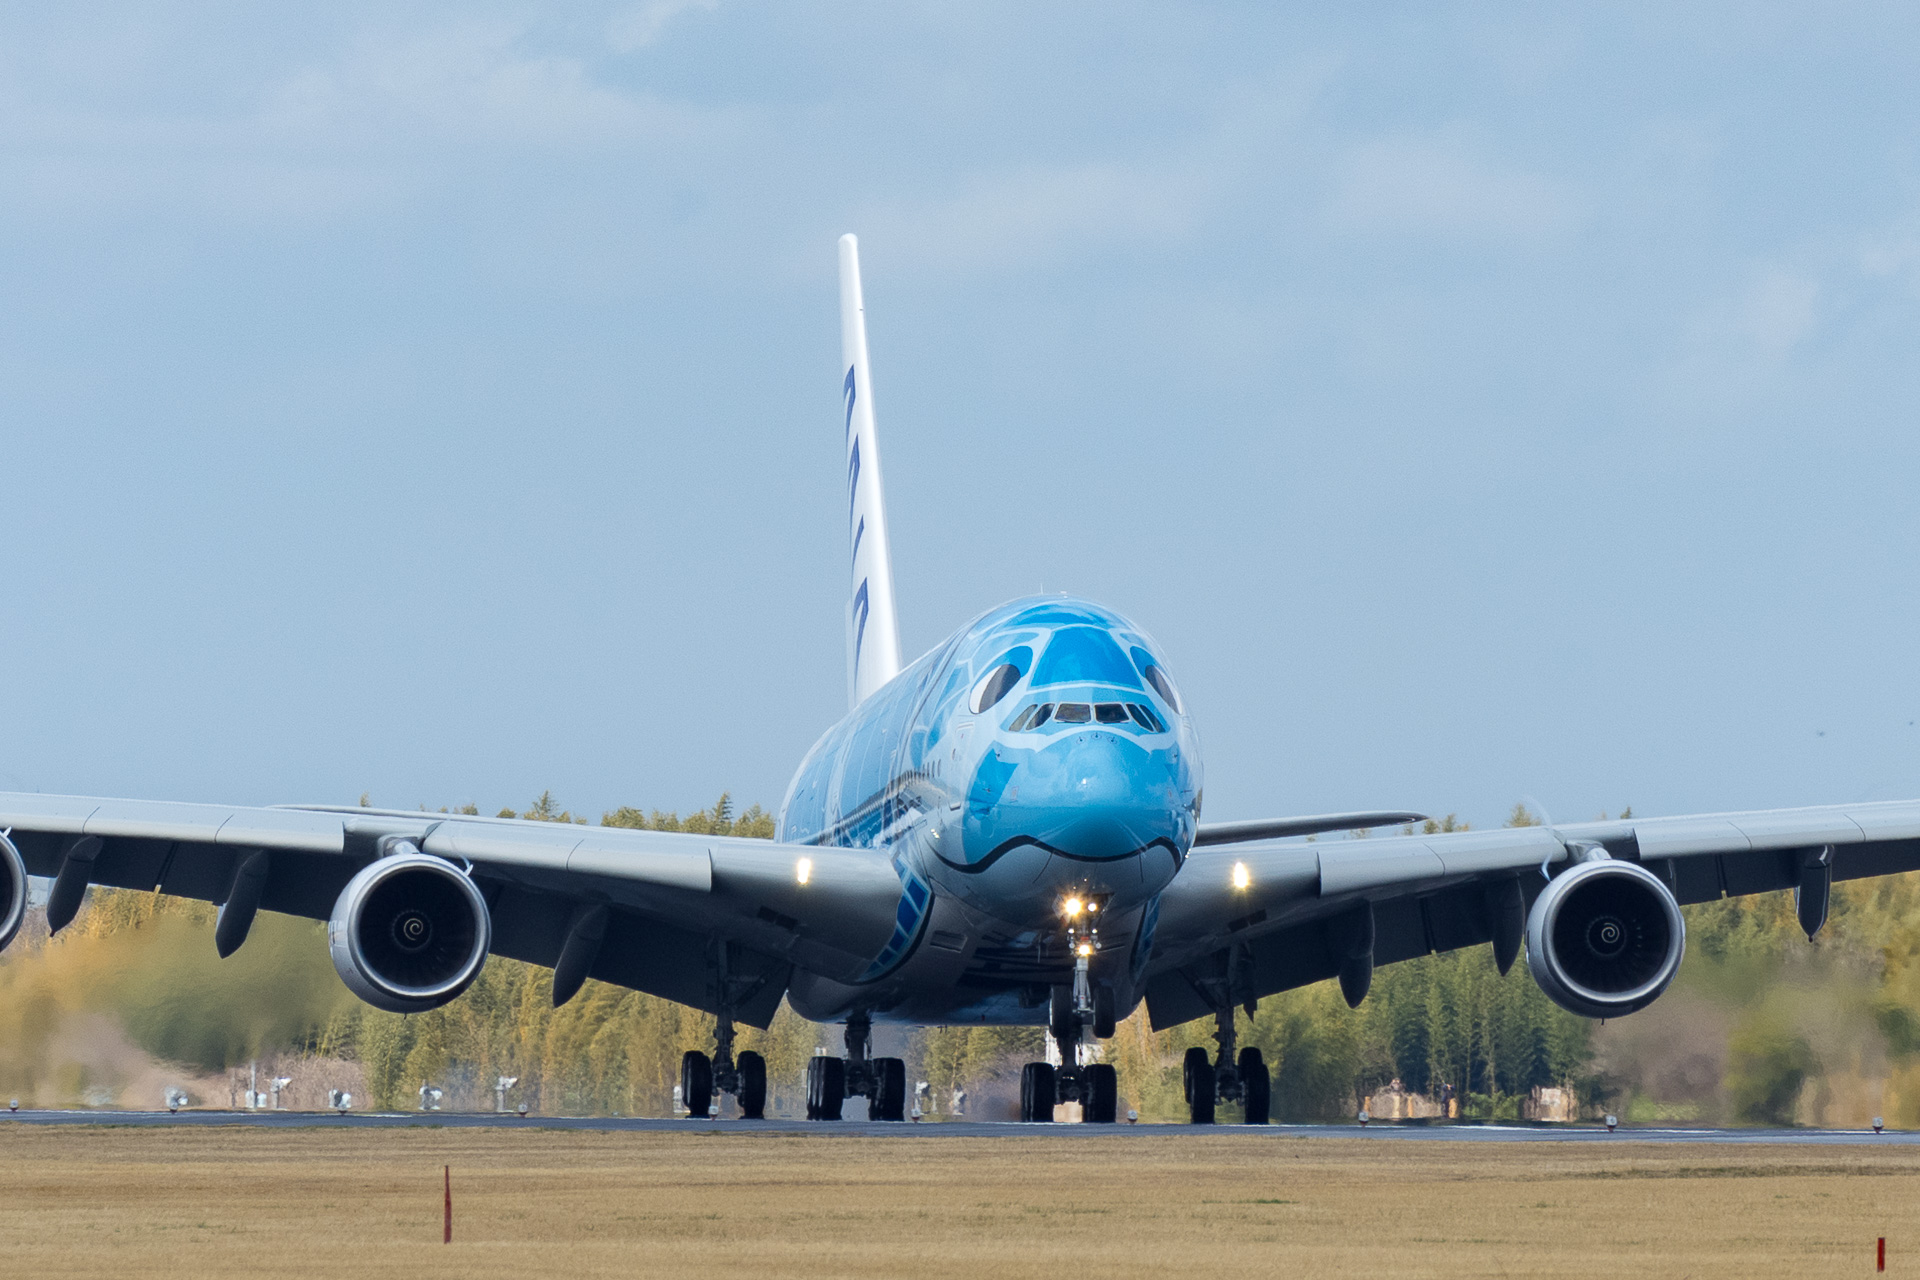 ANAのエアバス A380型機「FLYING HONU」1号機の日本到着を写真で紹介 